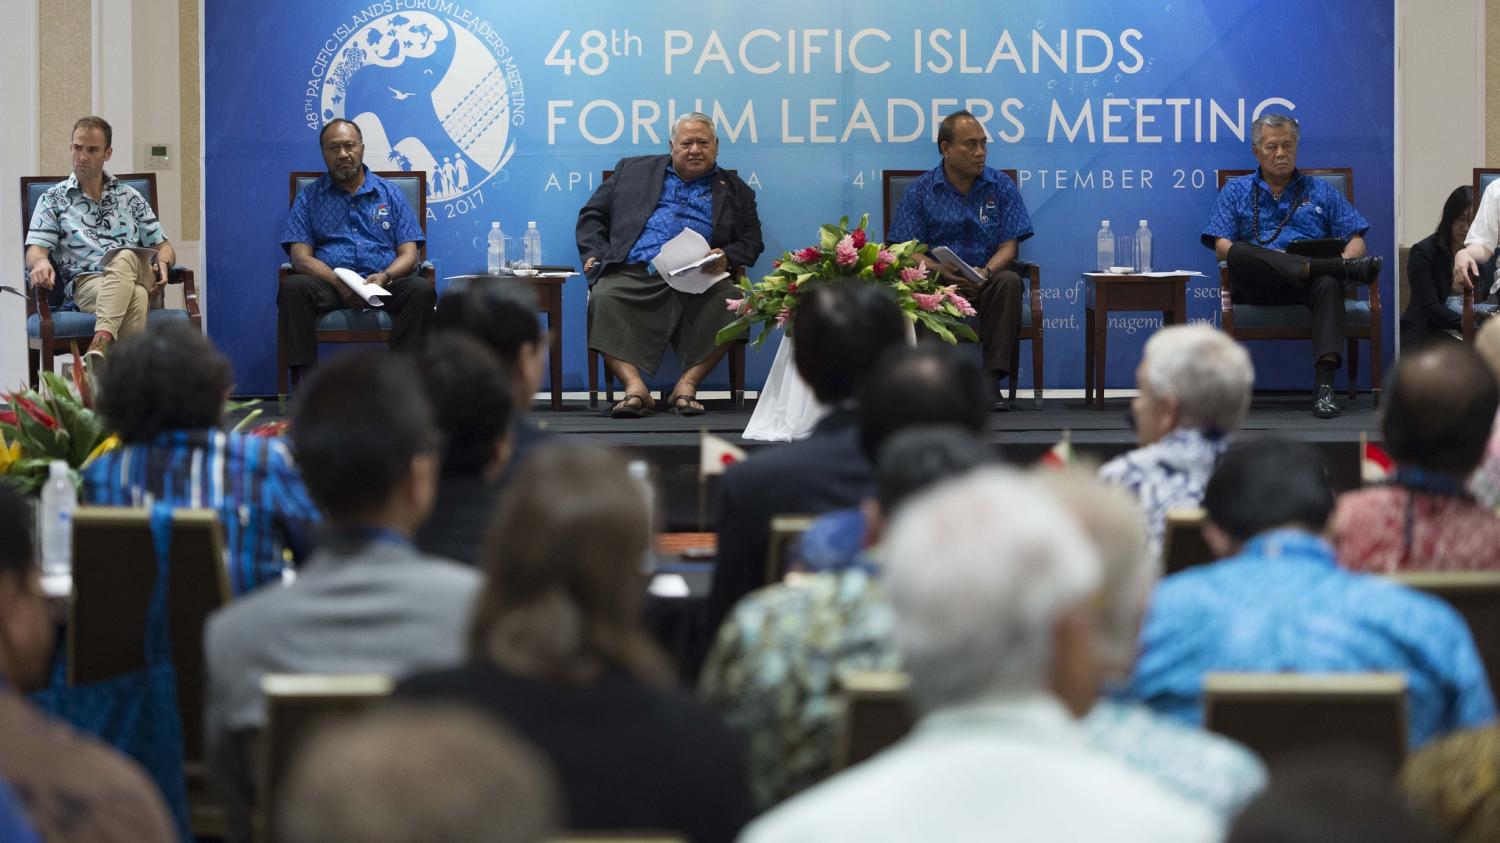 Opening the 2017 Pacific Island Forum Leaders Meeting, Apia, Samoa (Photo: US Embassy, Wellington/Flickr)